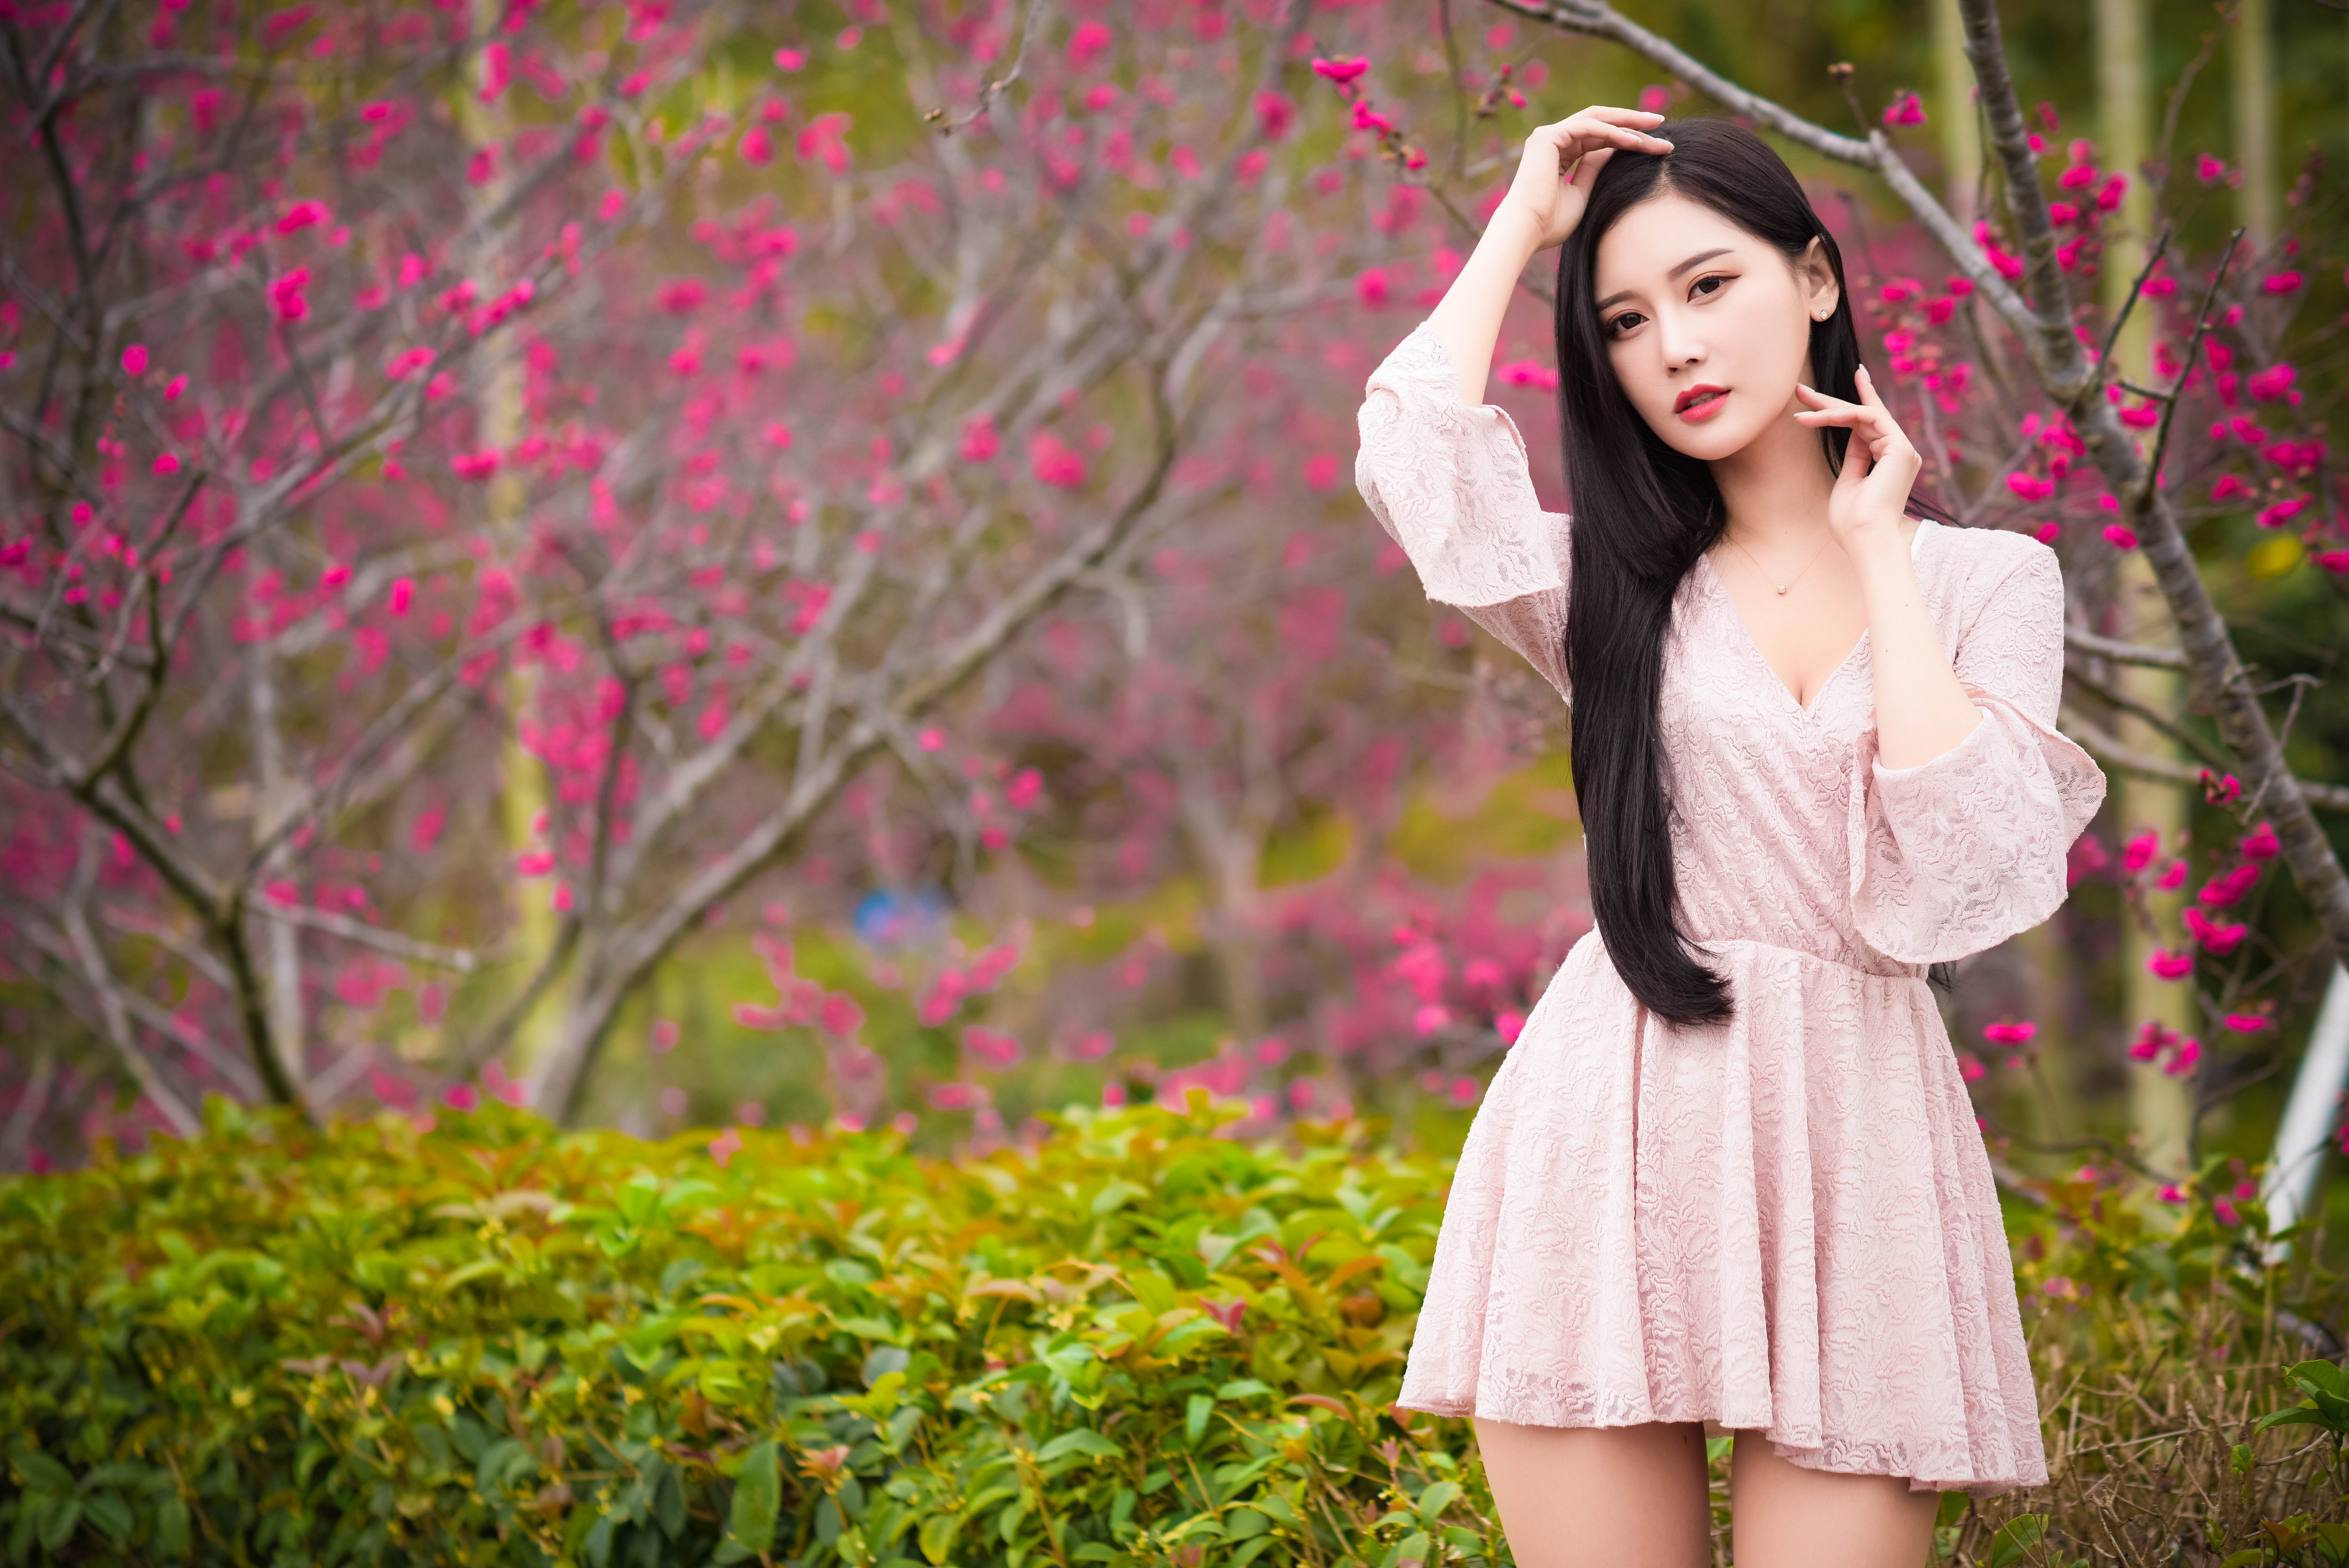 Asian Model Women Long Hair Dark Hair Bushes Trees Dress Depth Of Field Brunette Makeup Flowers Wome 3840x2563